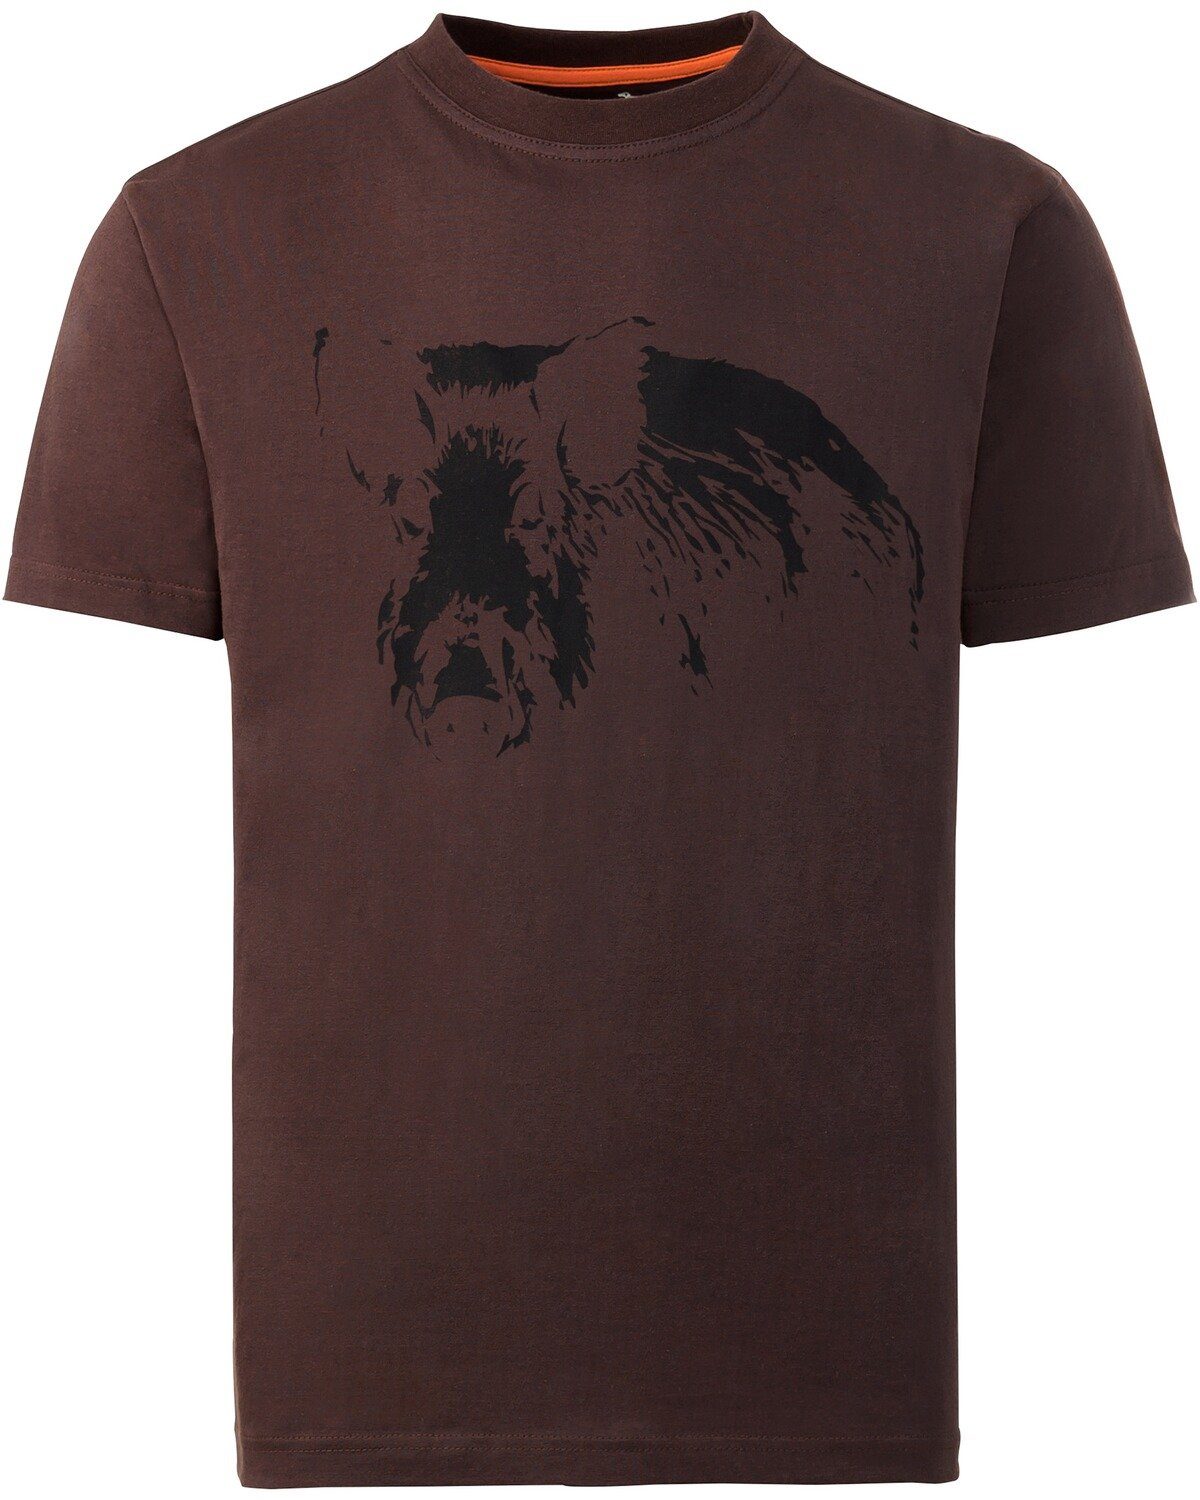 Parforce T-Shirt Braun T-Shirt Keiler-Print